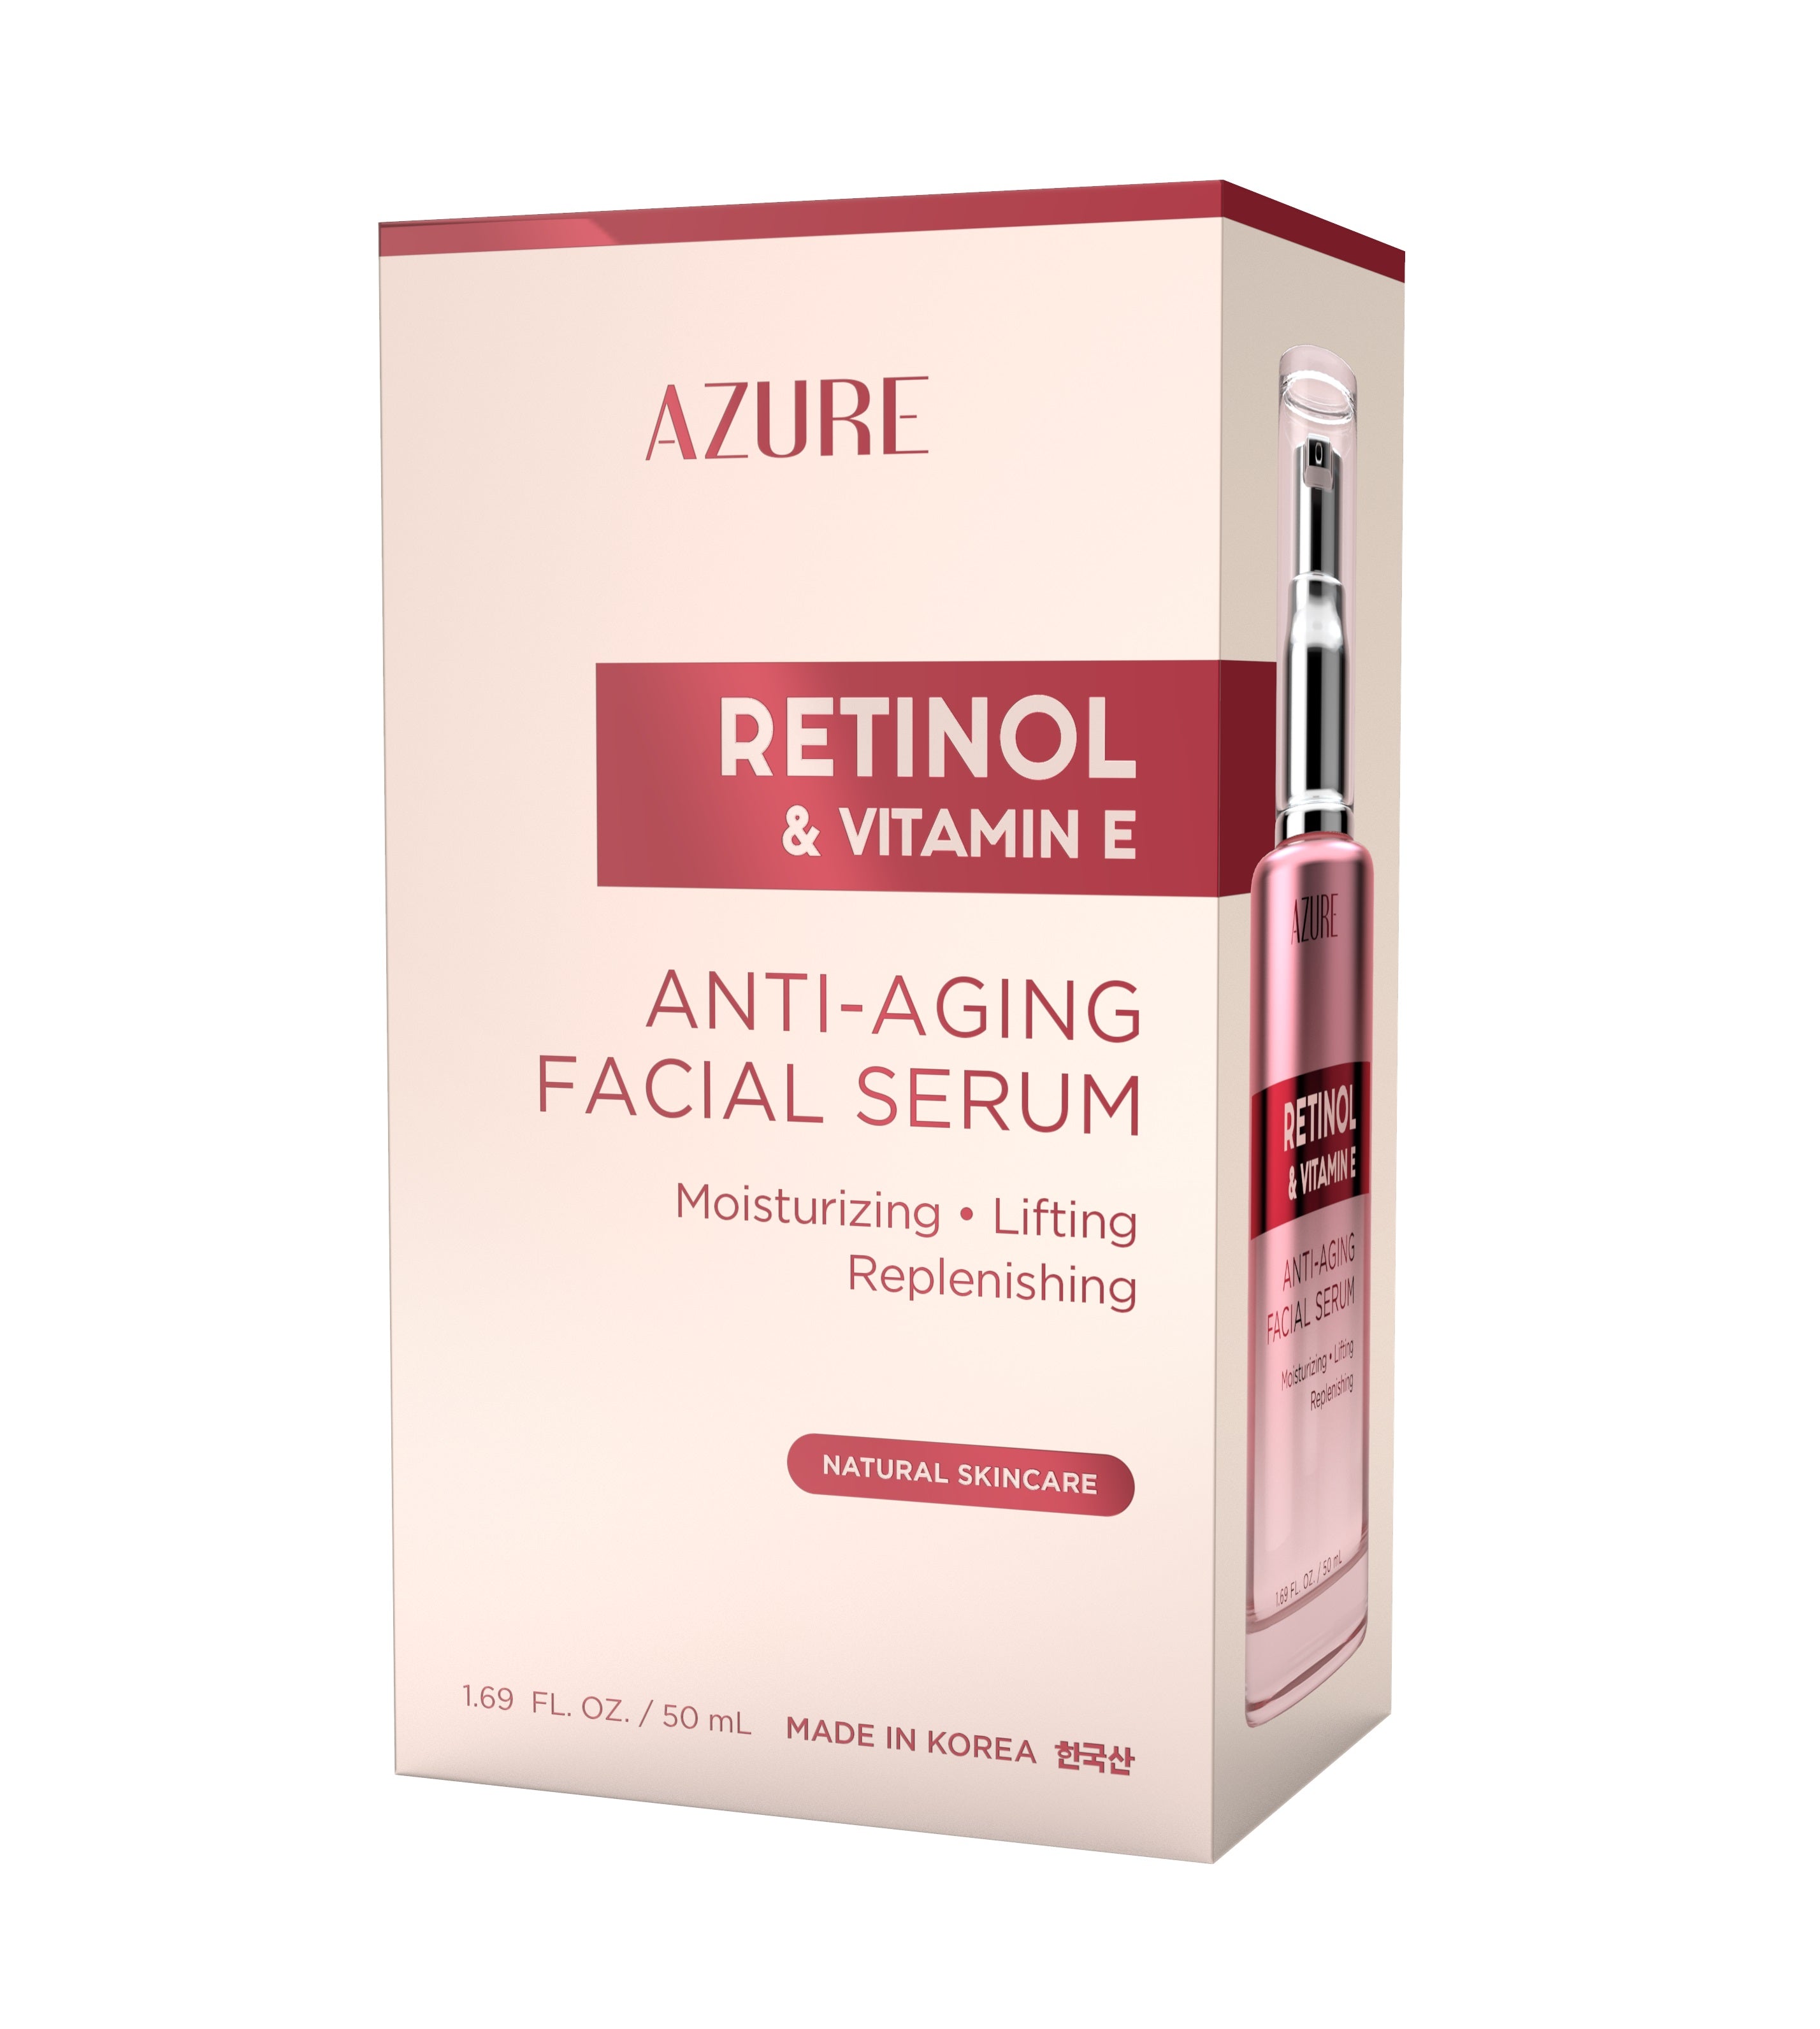 Retinol & Vitamin E Anti-Aging Facial Serum